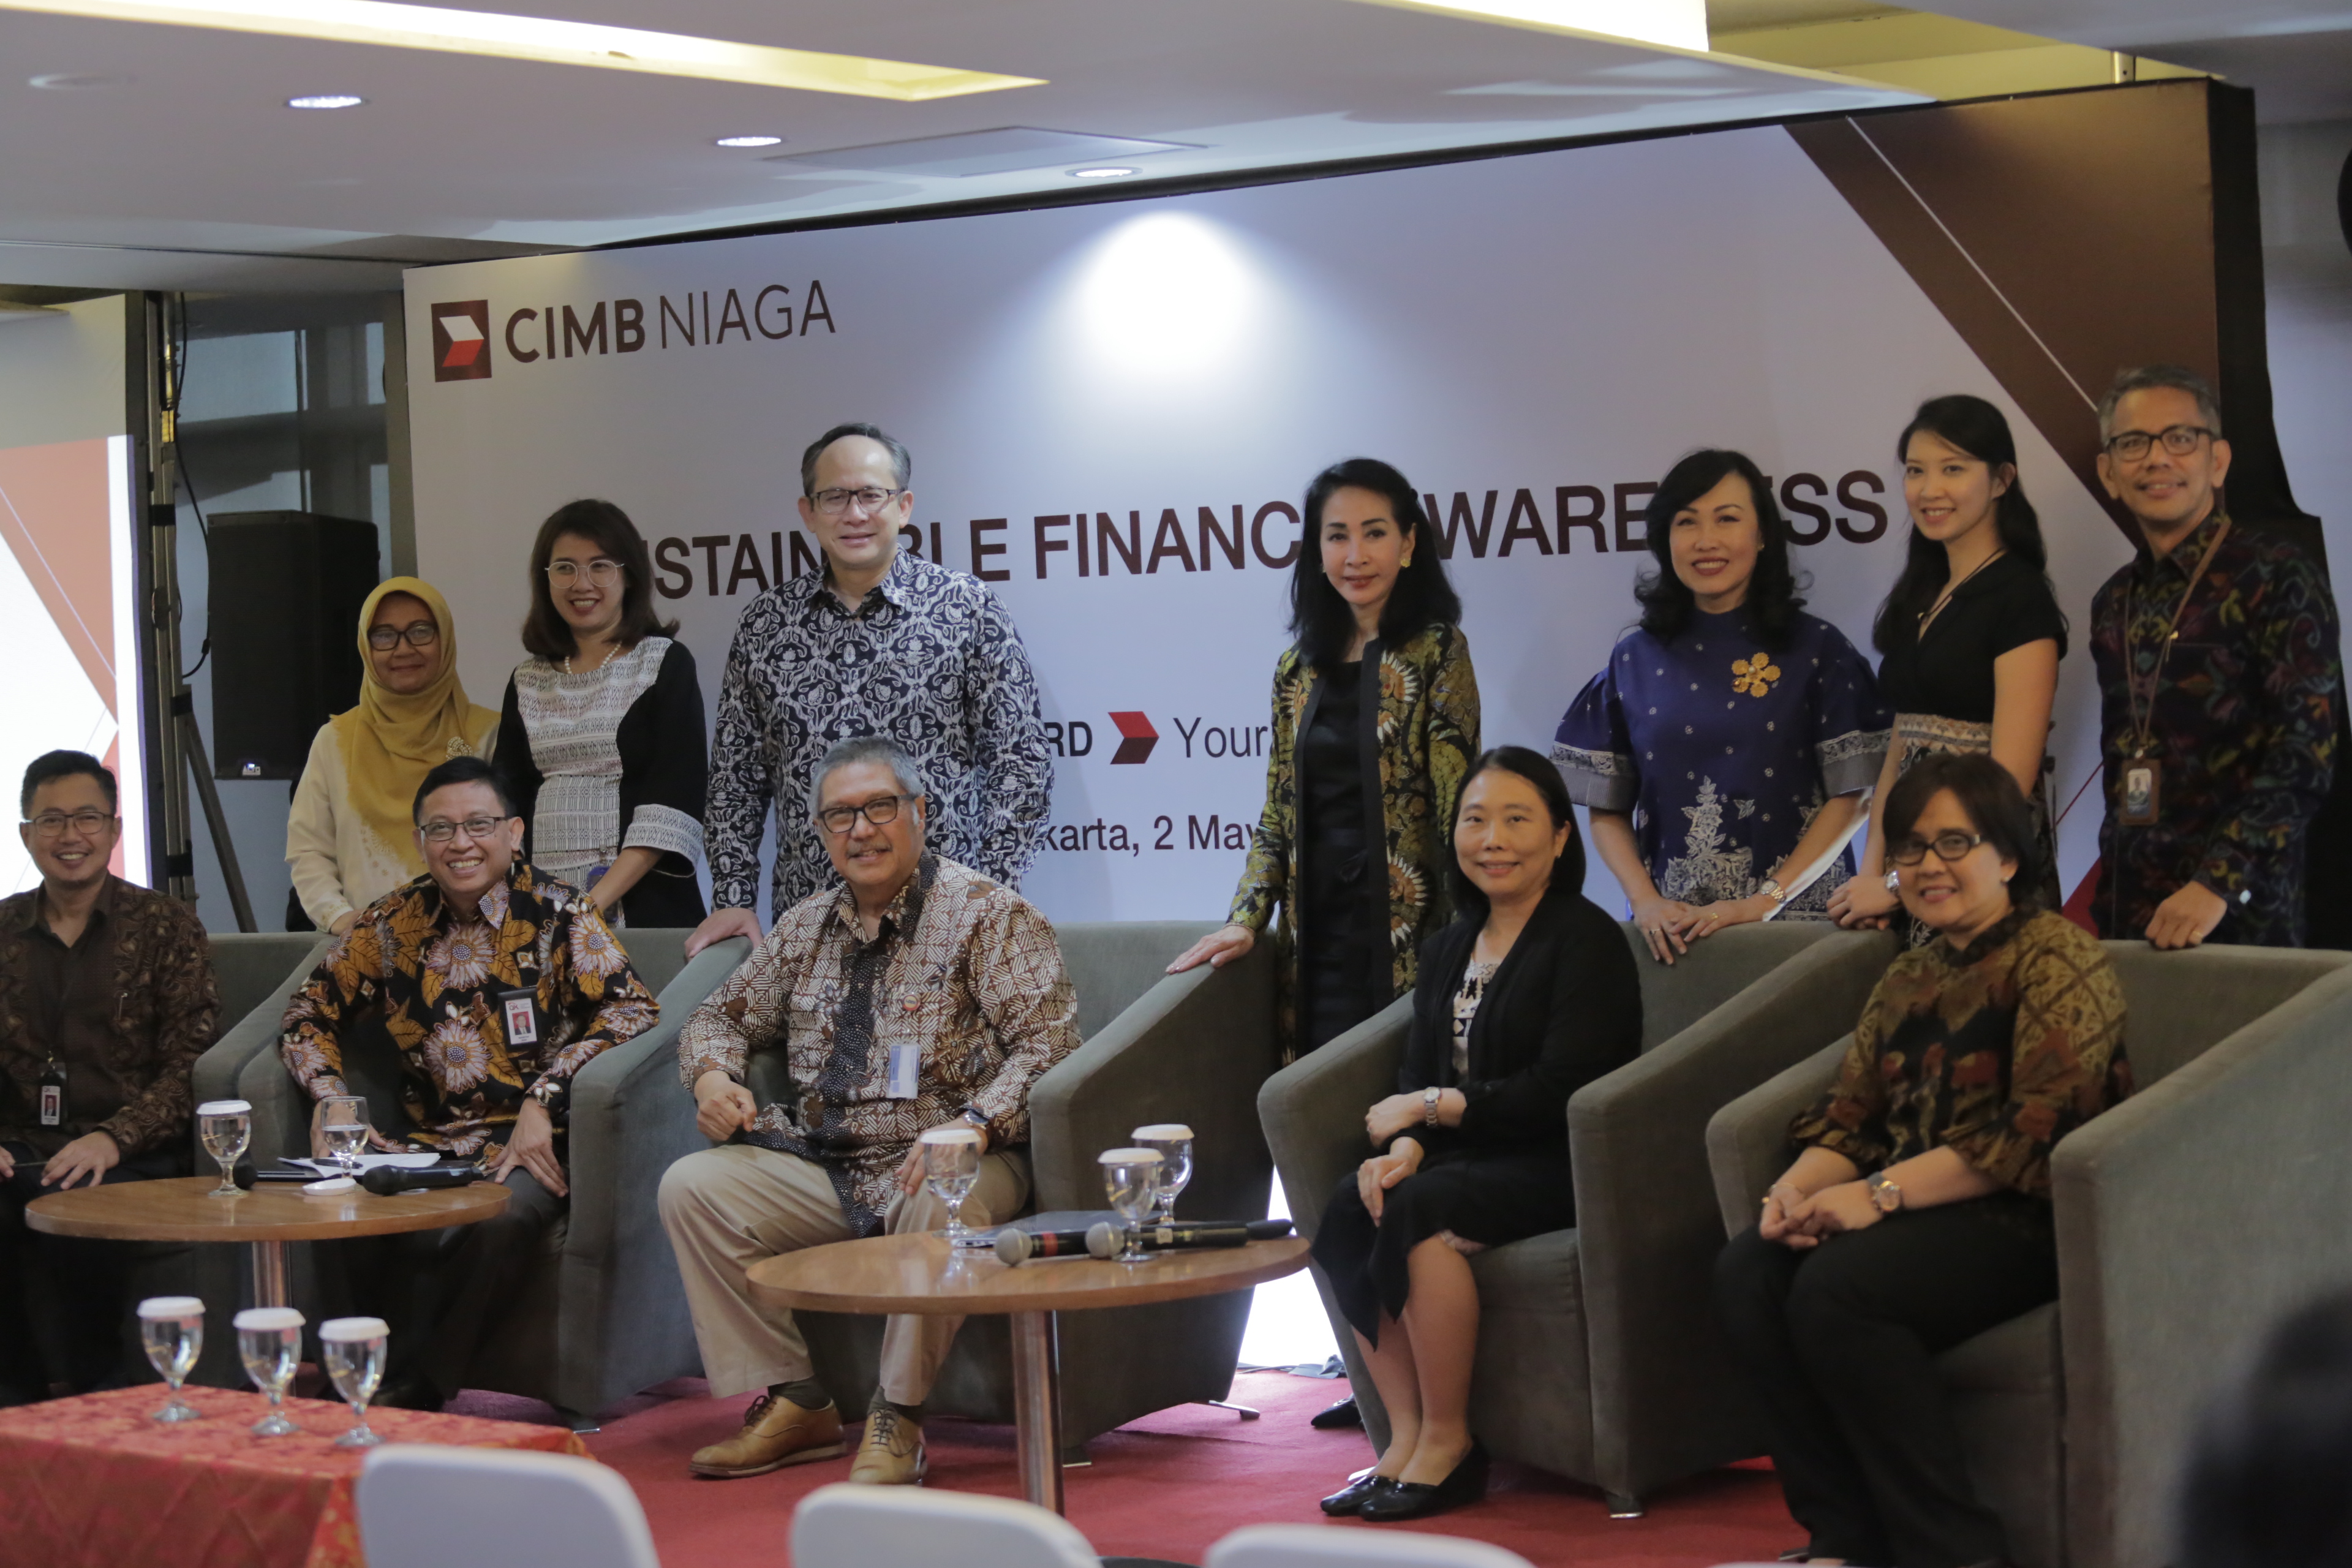 Seminar Sustainable Finance Awareness CIMB Niaga